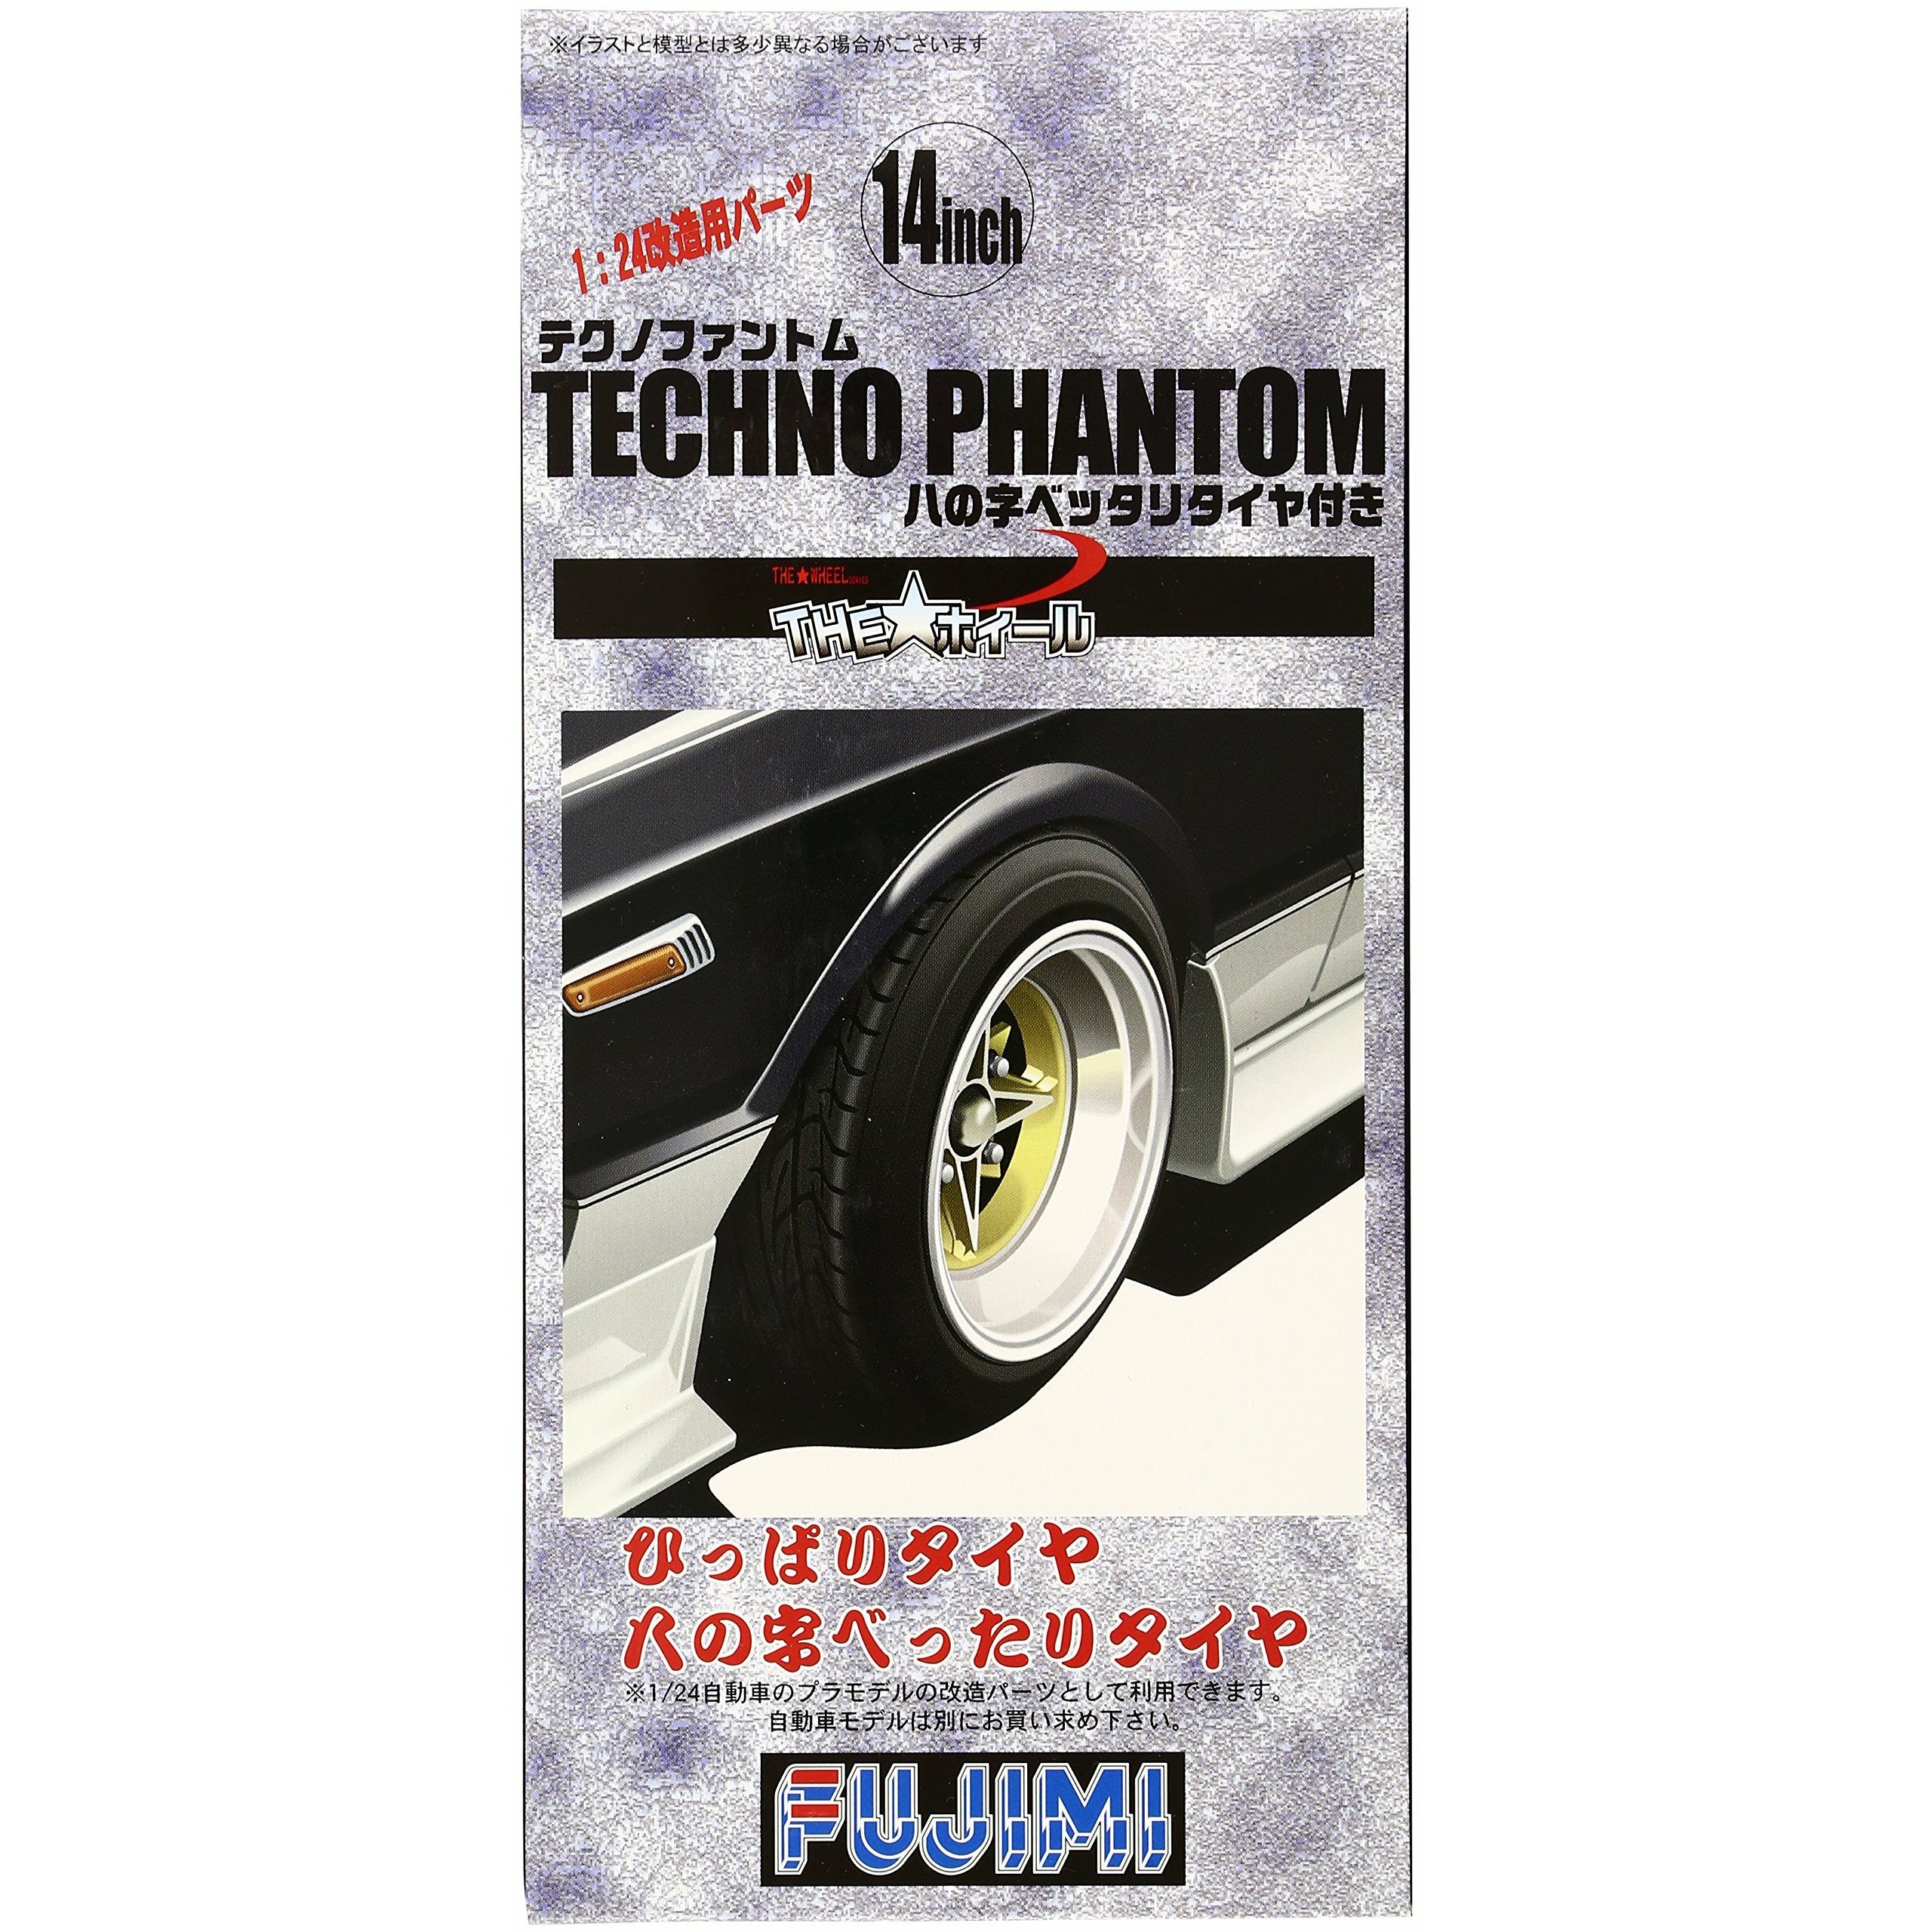 The Wheel Series (No.69) Techno Phantom Wheel & Tire Set 14 inch 1/24 Car Accessory Model Kit #193380 by Fujimi